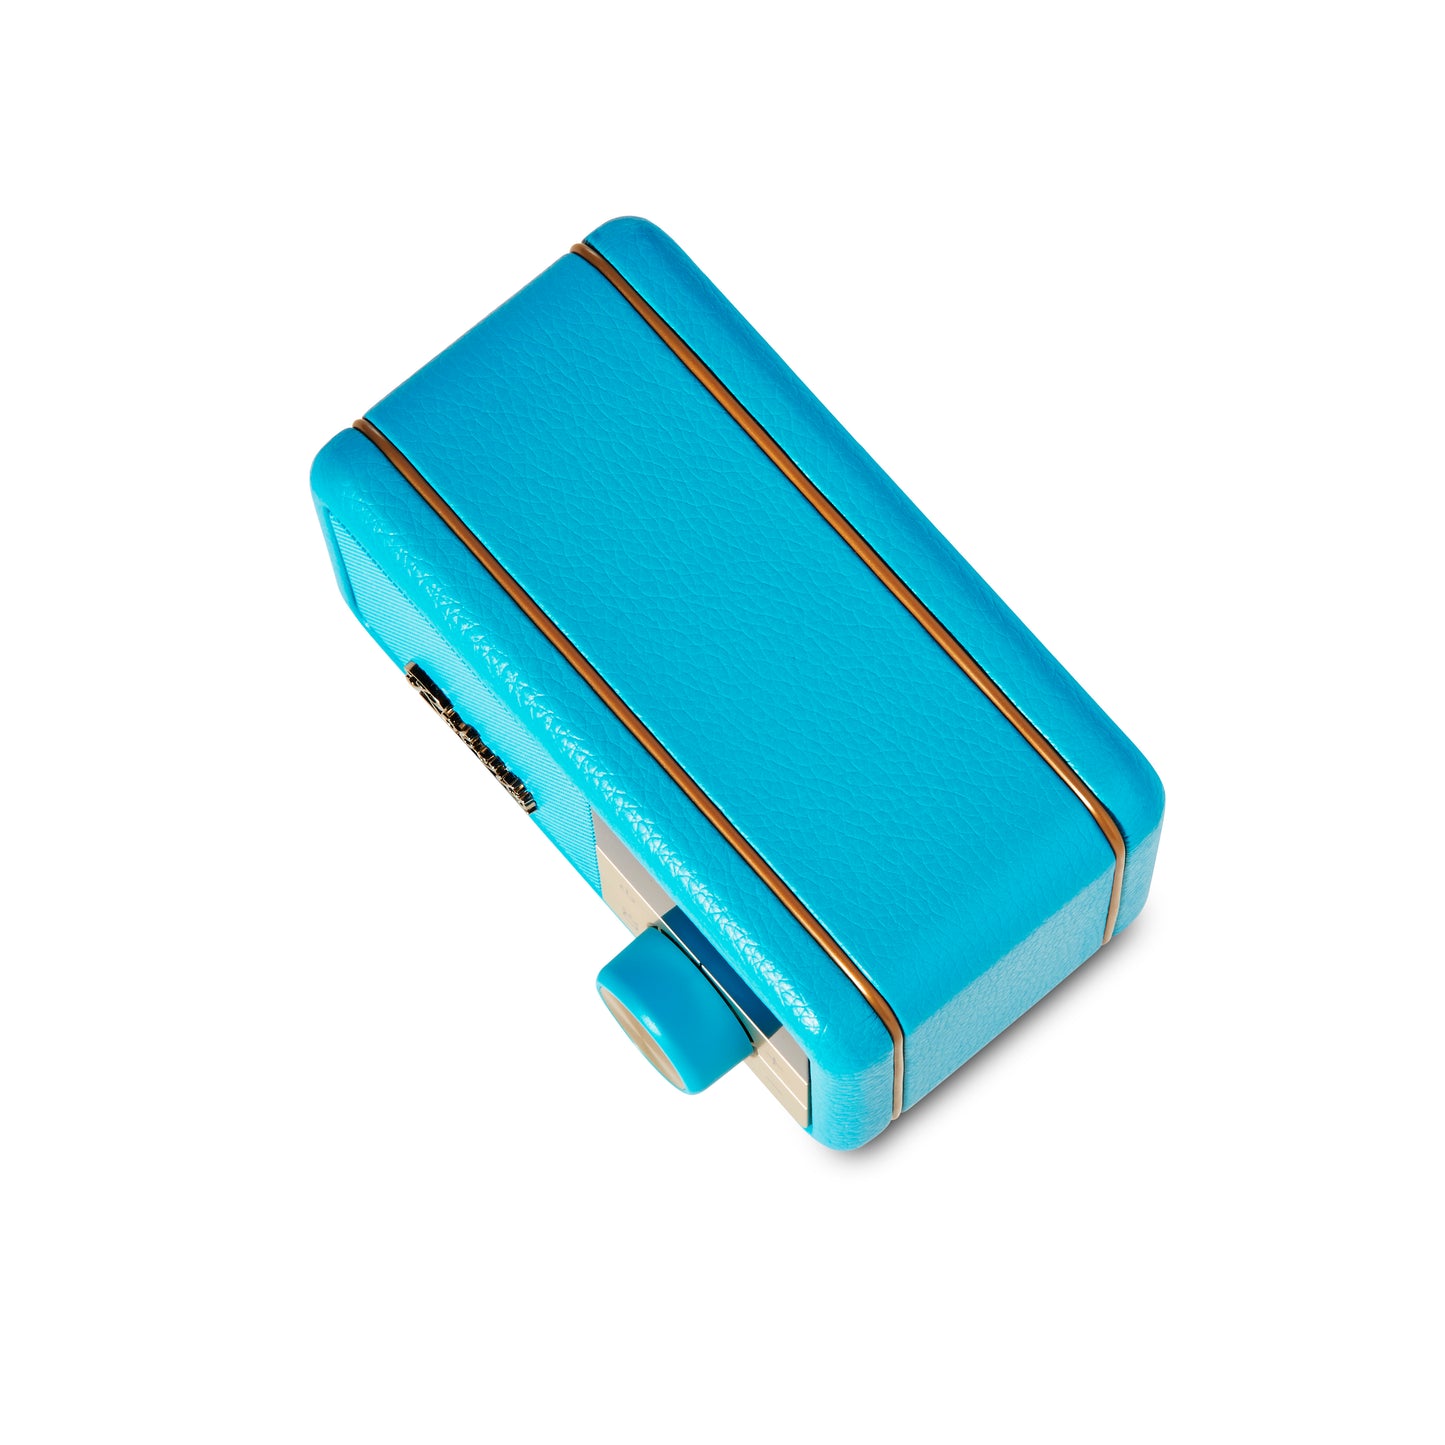 Revival Petite | electric blue | tragbares FM / DAB+ Radio mit Bluetooth und integriertem Akku